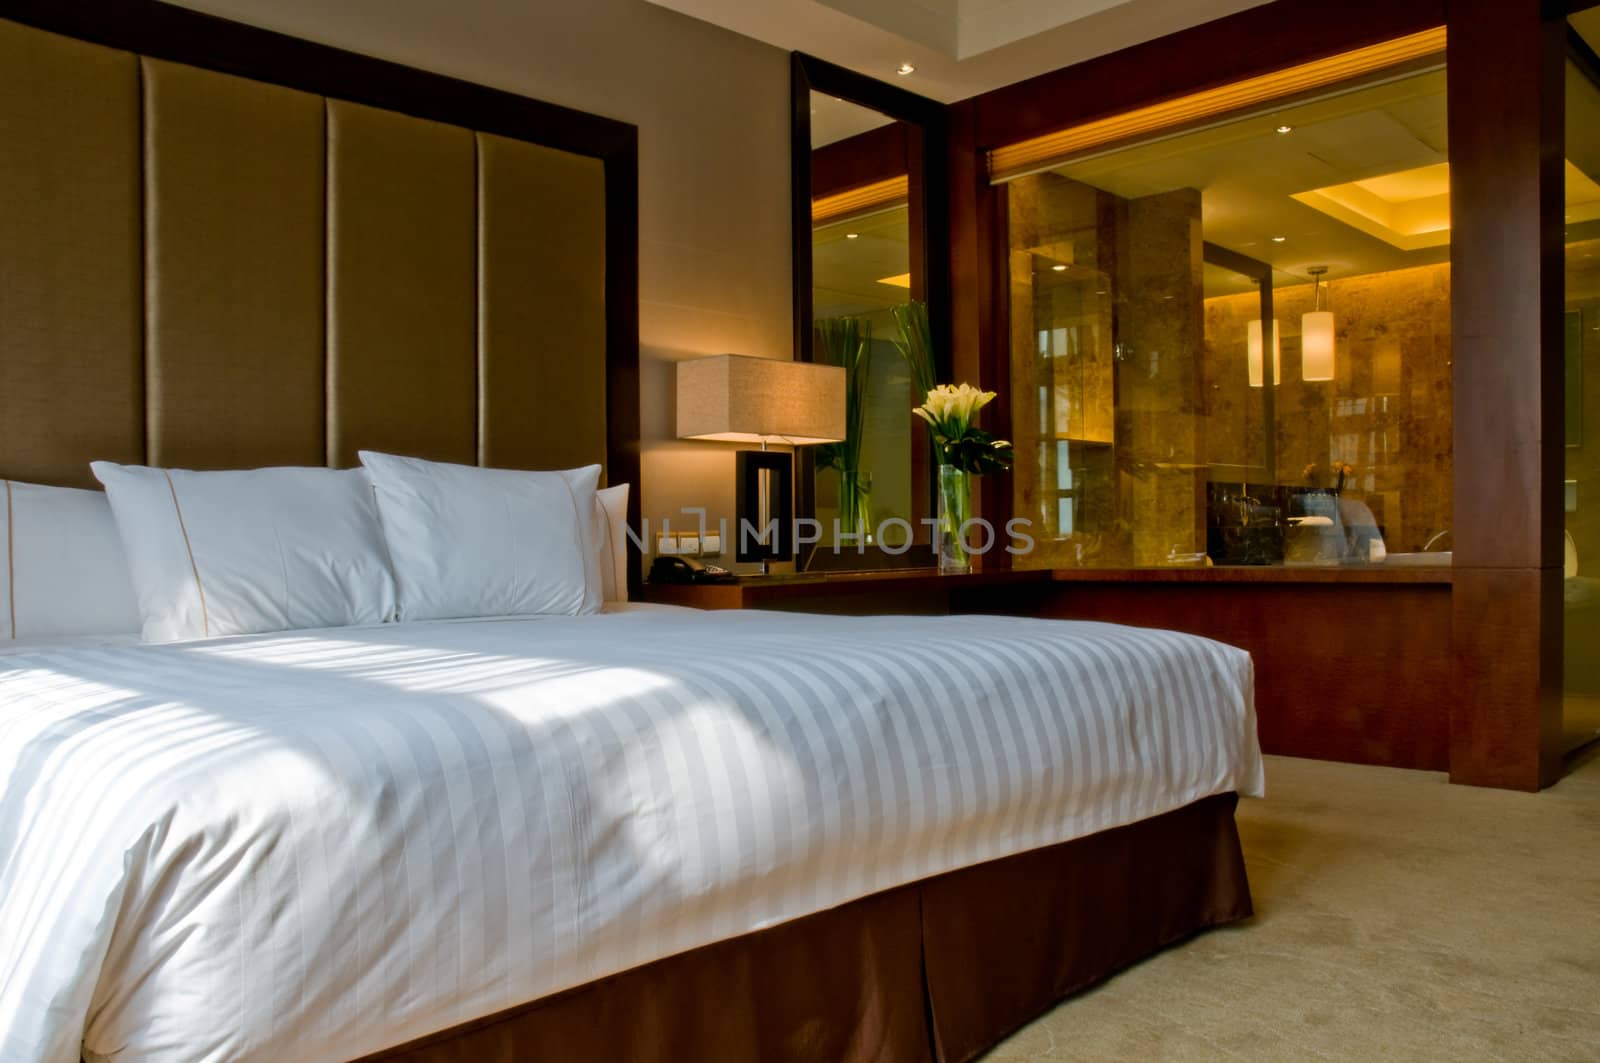 Bedroom of a elegant 5 star luxury hotel by 3523Studio